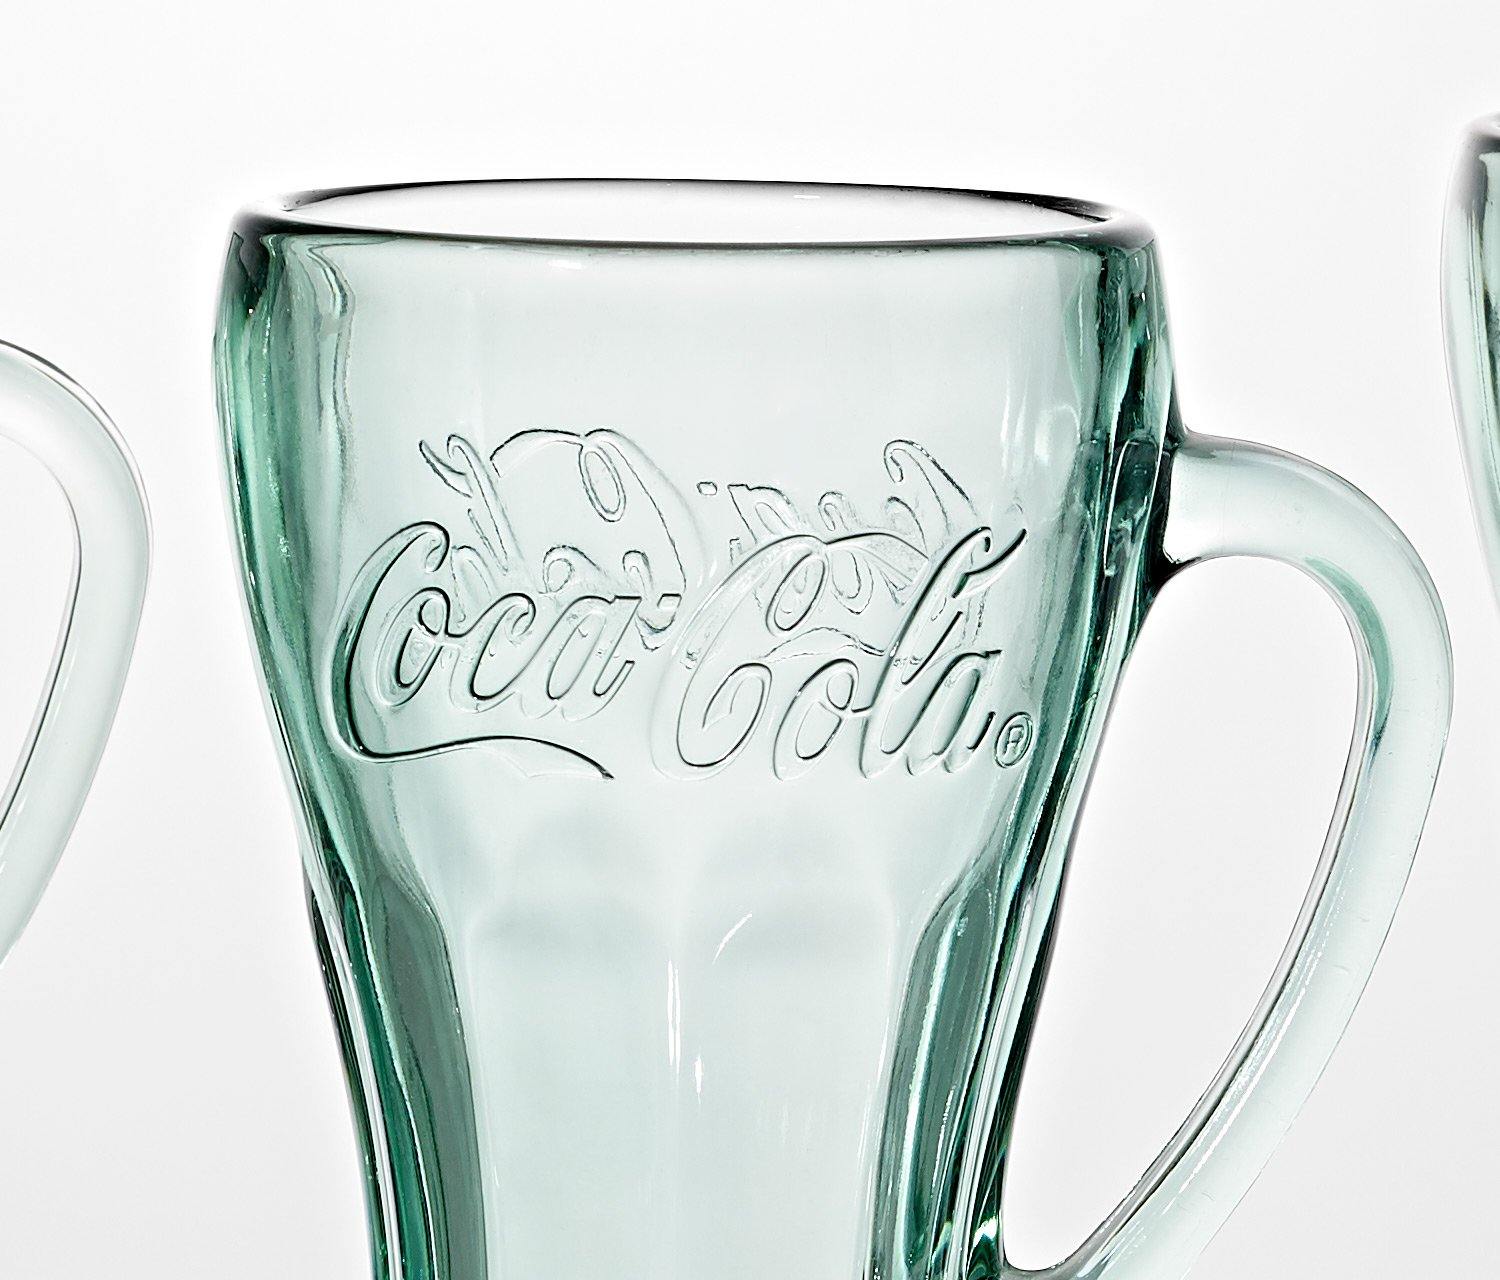 Coke Glass